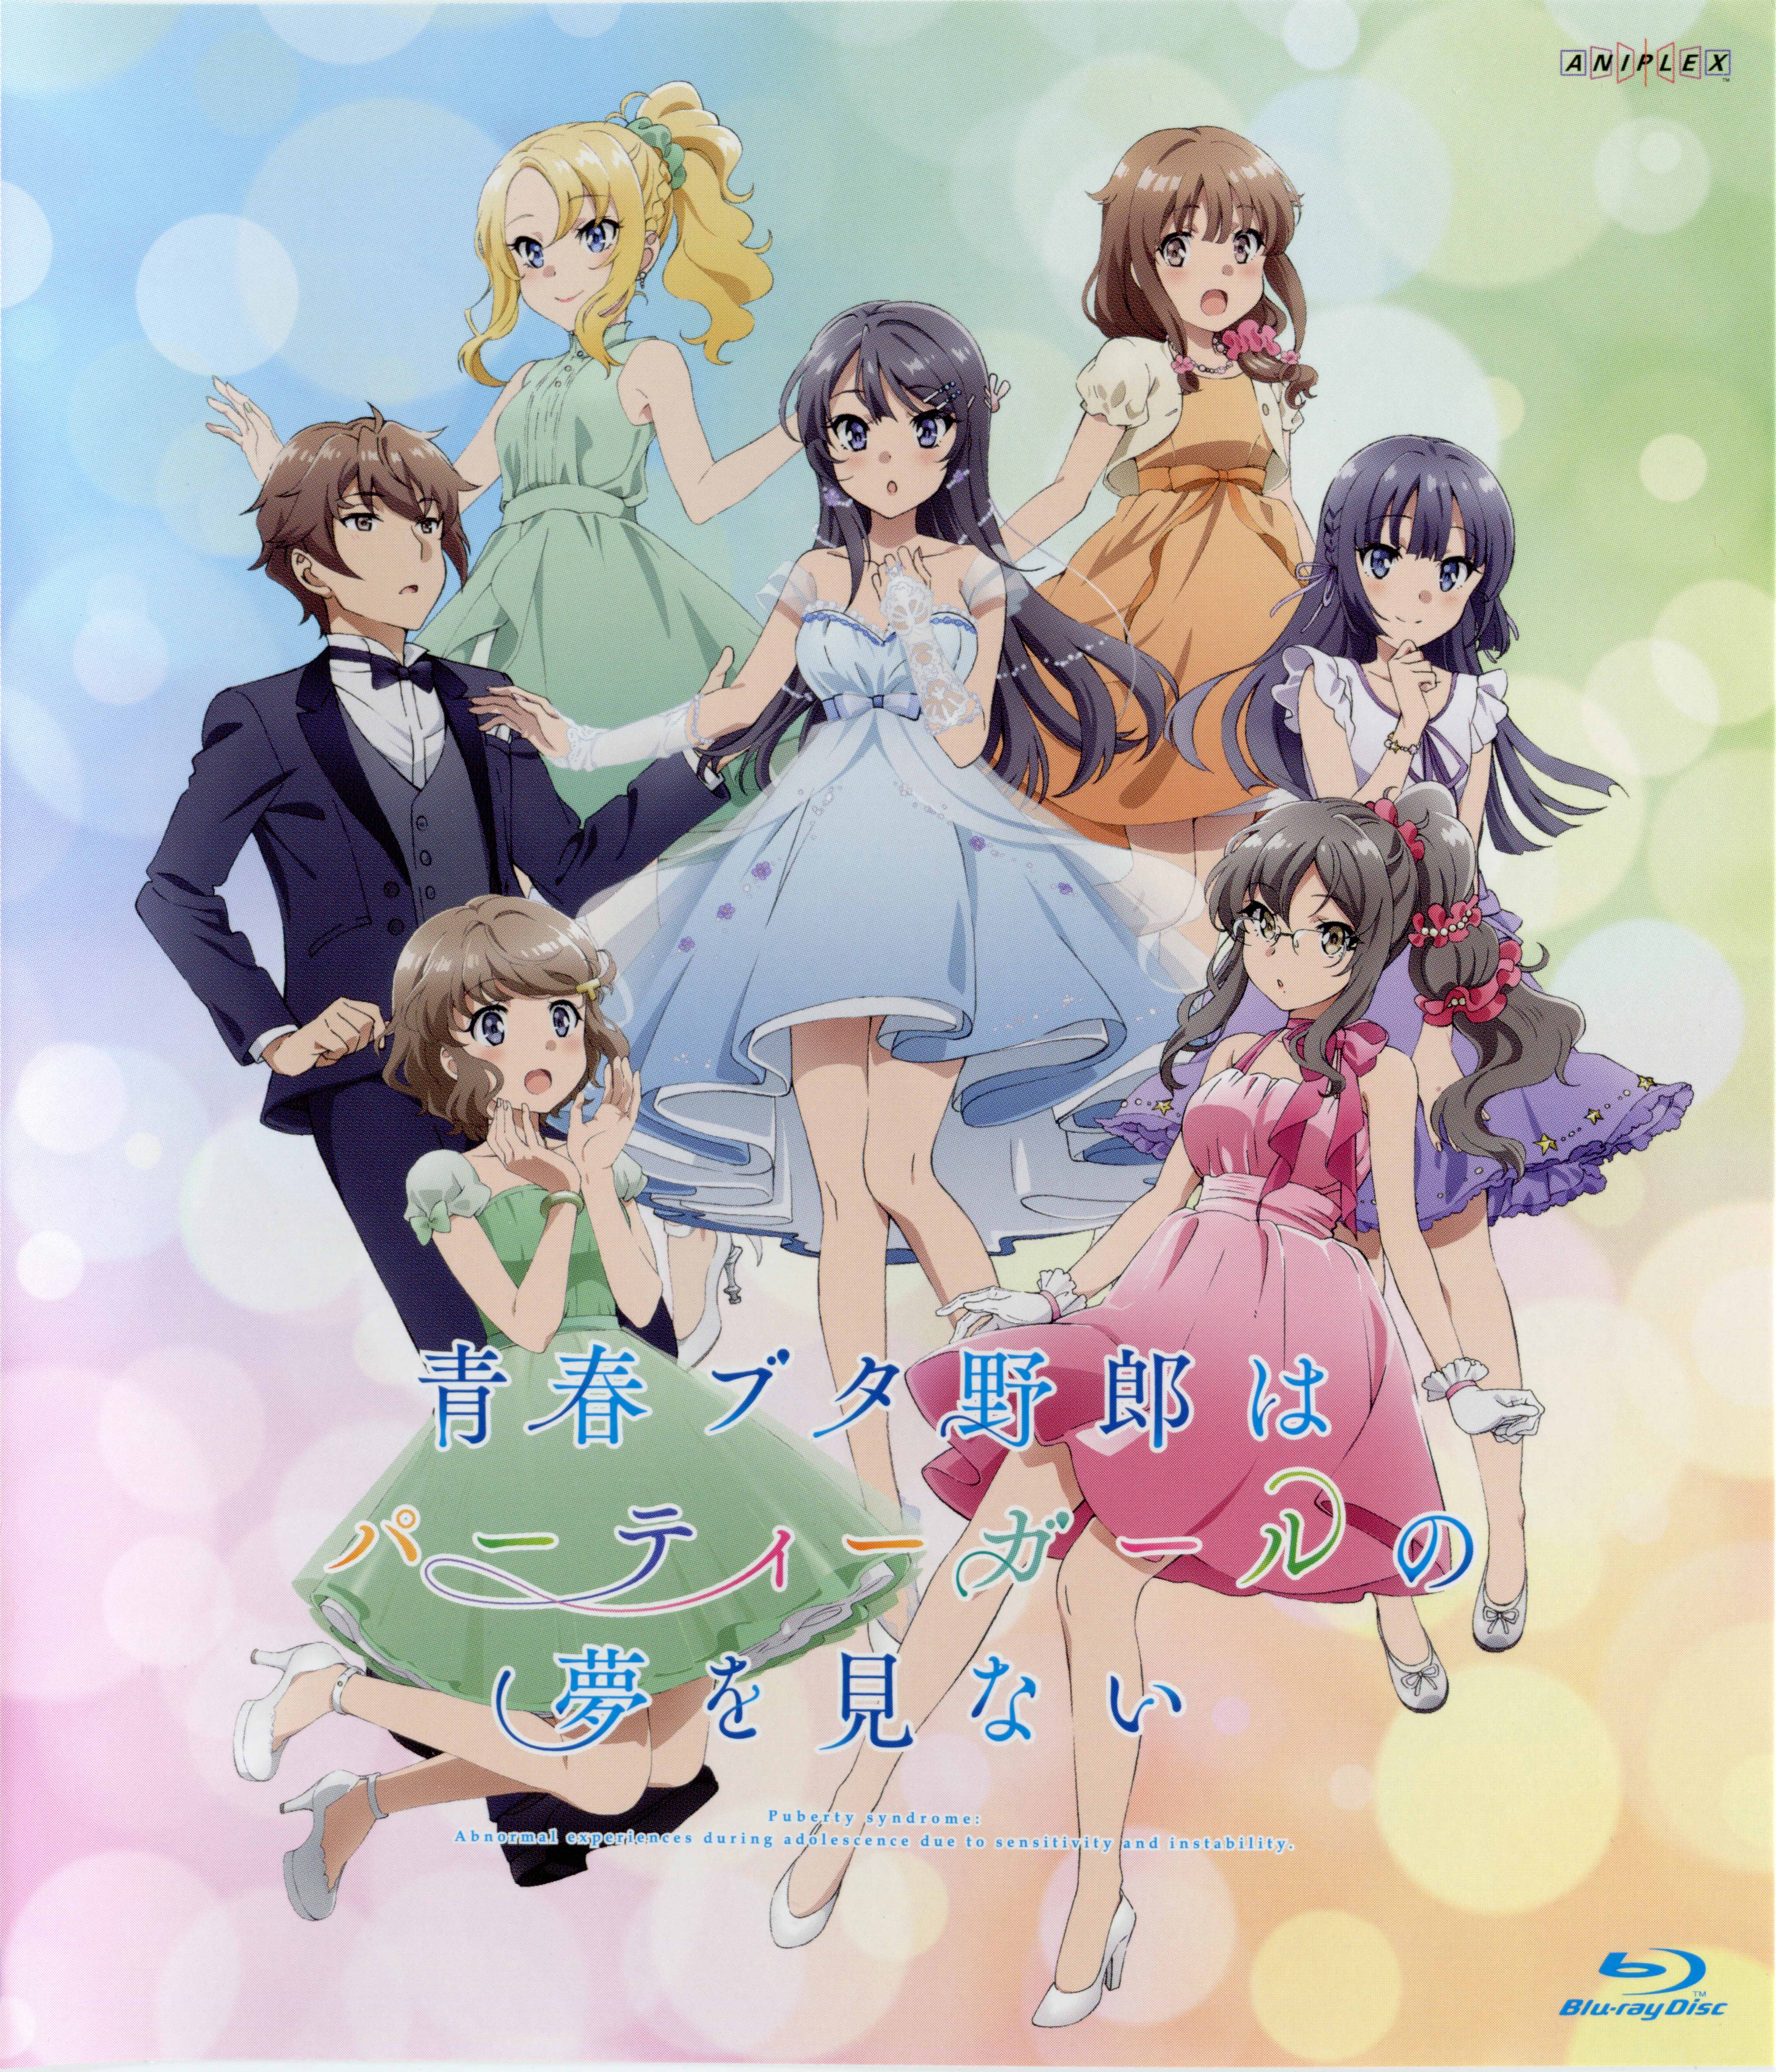 Futaba Rio Buta Yarou Series Anime Image Board